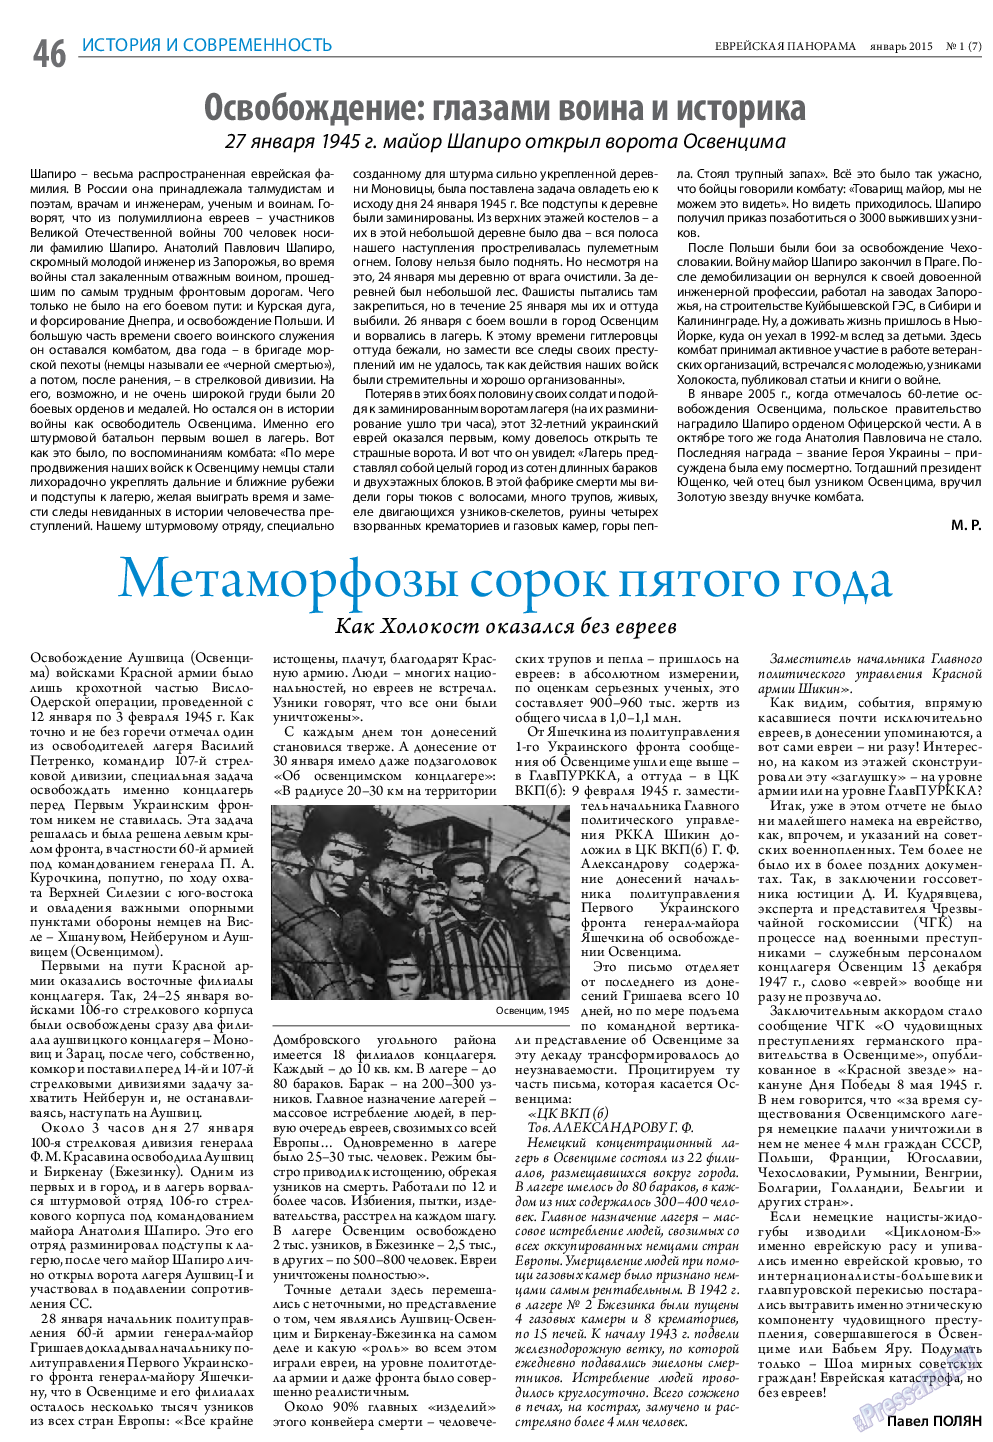 Еврейская панорама, газета. 2015 №1 стр.46